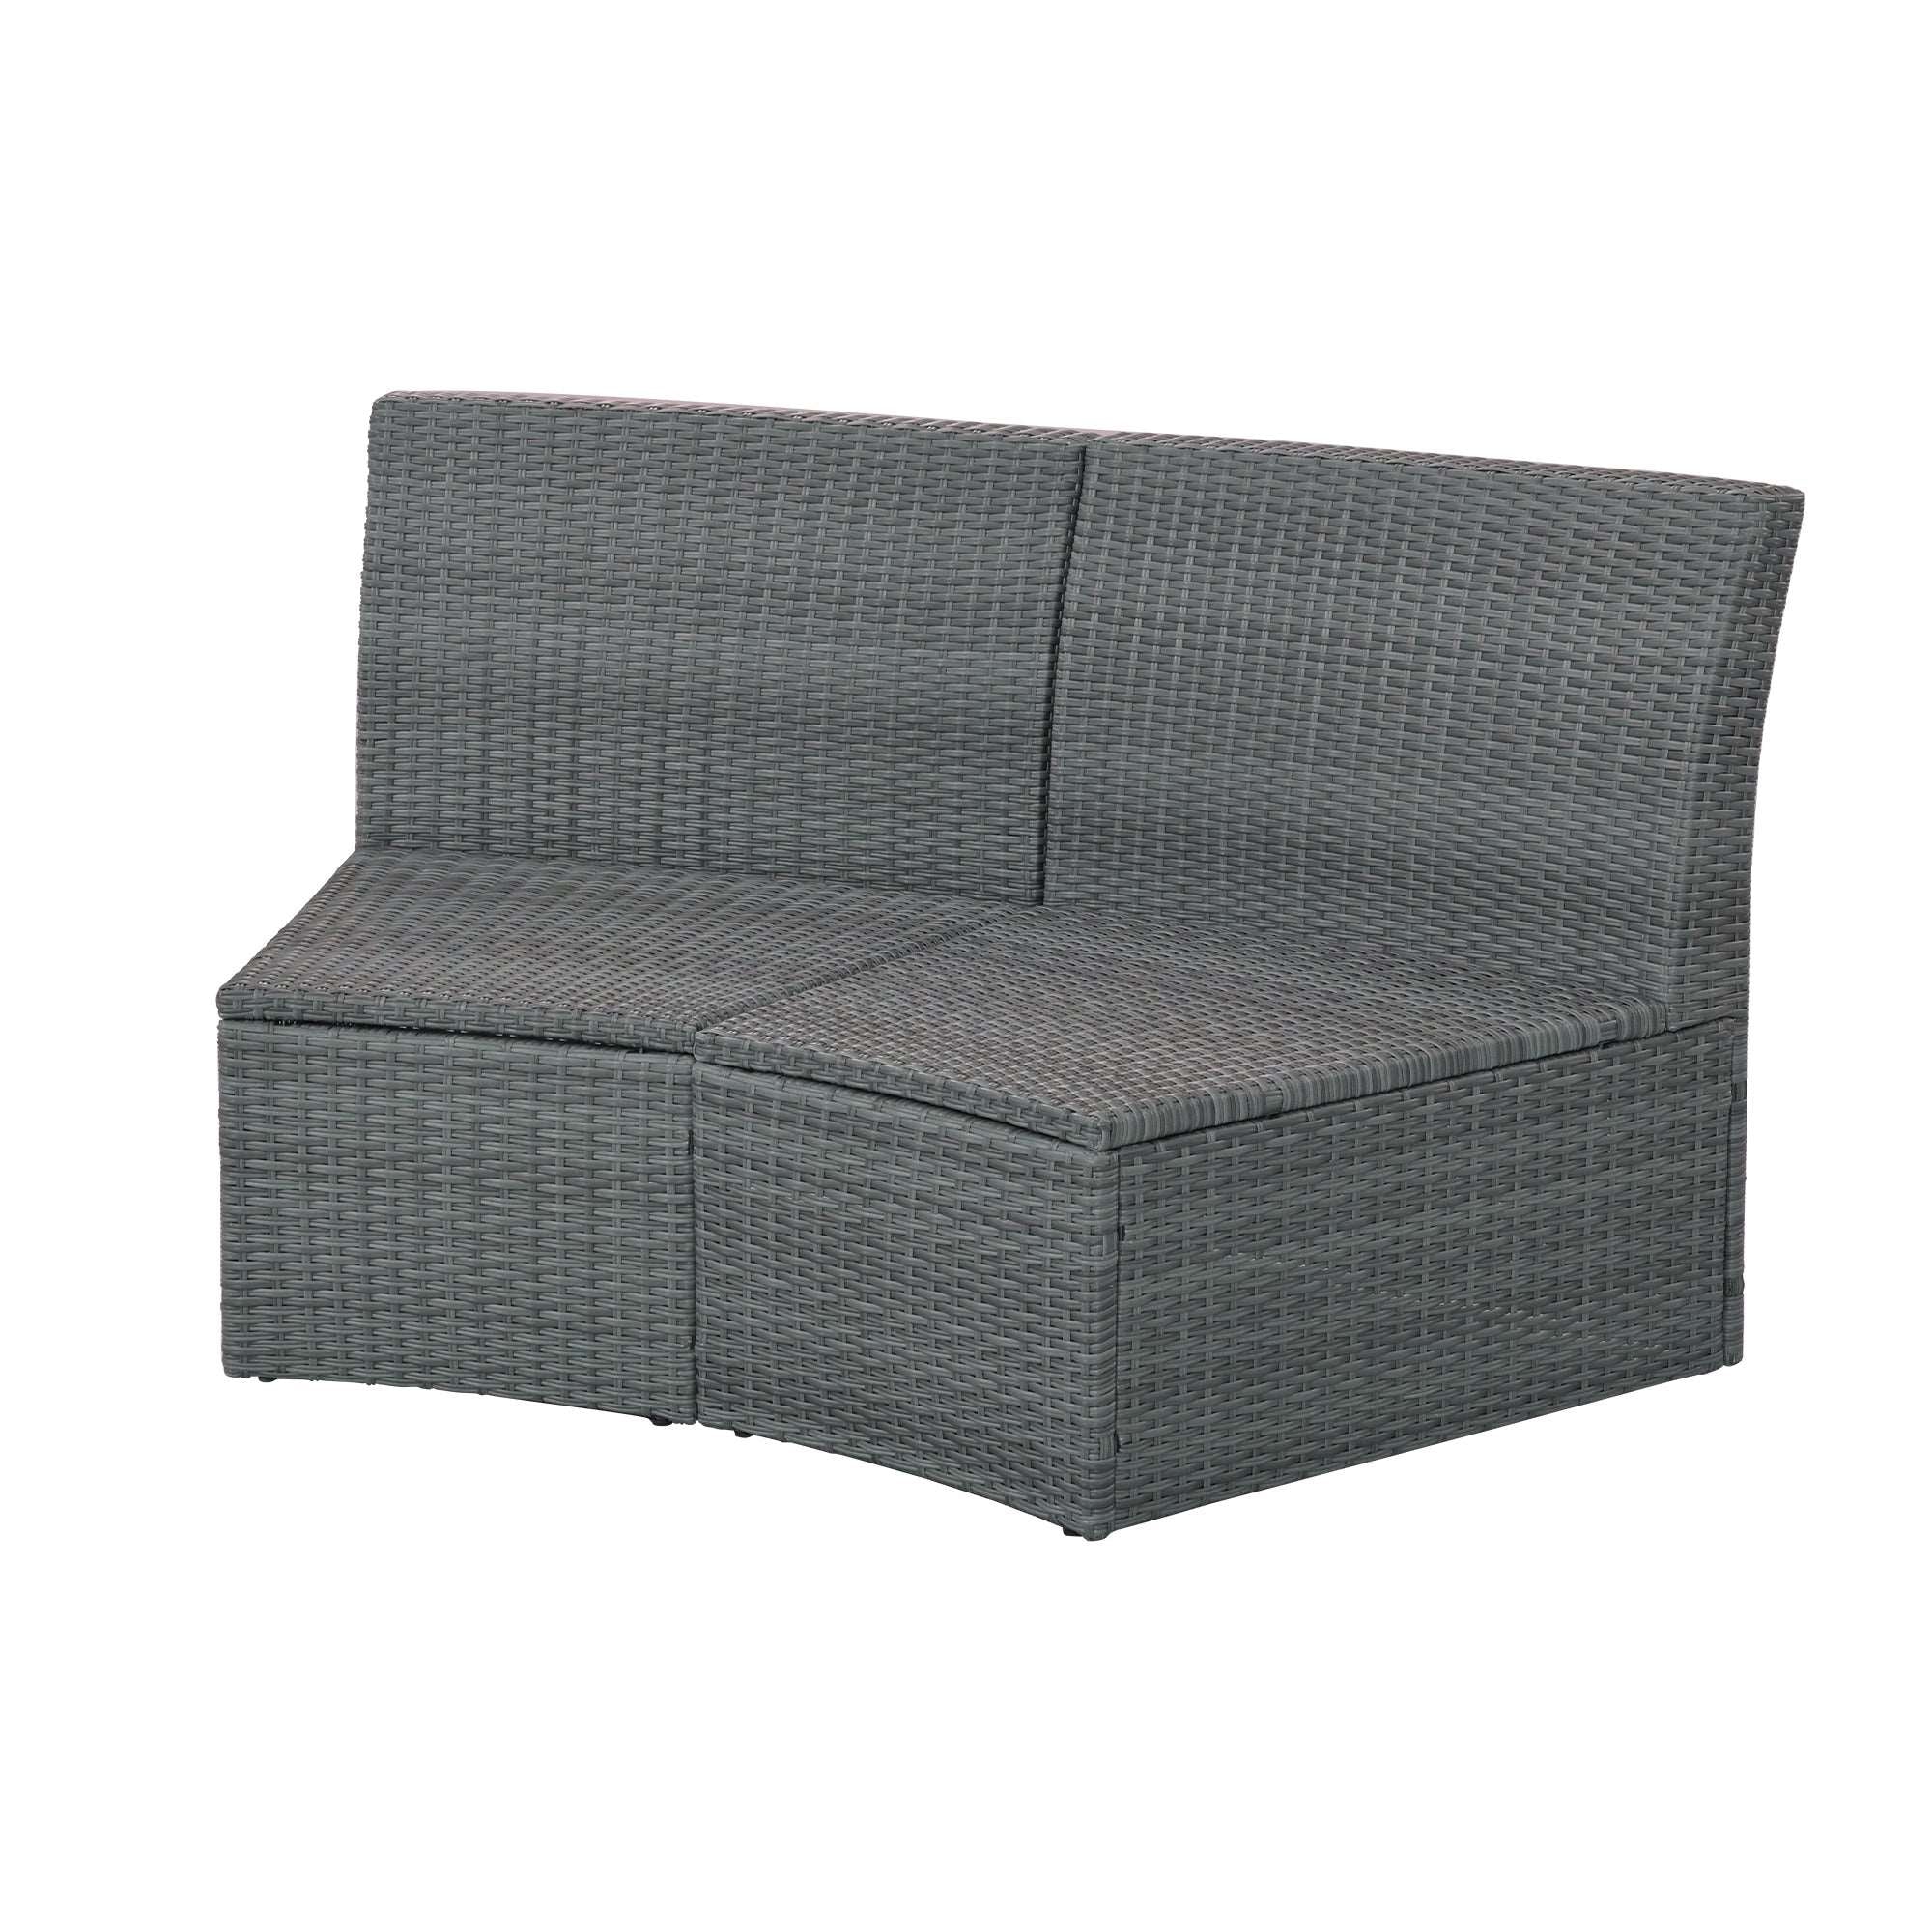 Bellemave 10-Piece Outdoor Sectional Half Round Patio Rattan Sofa Set, PE Wicker Conversation Furniture Set